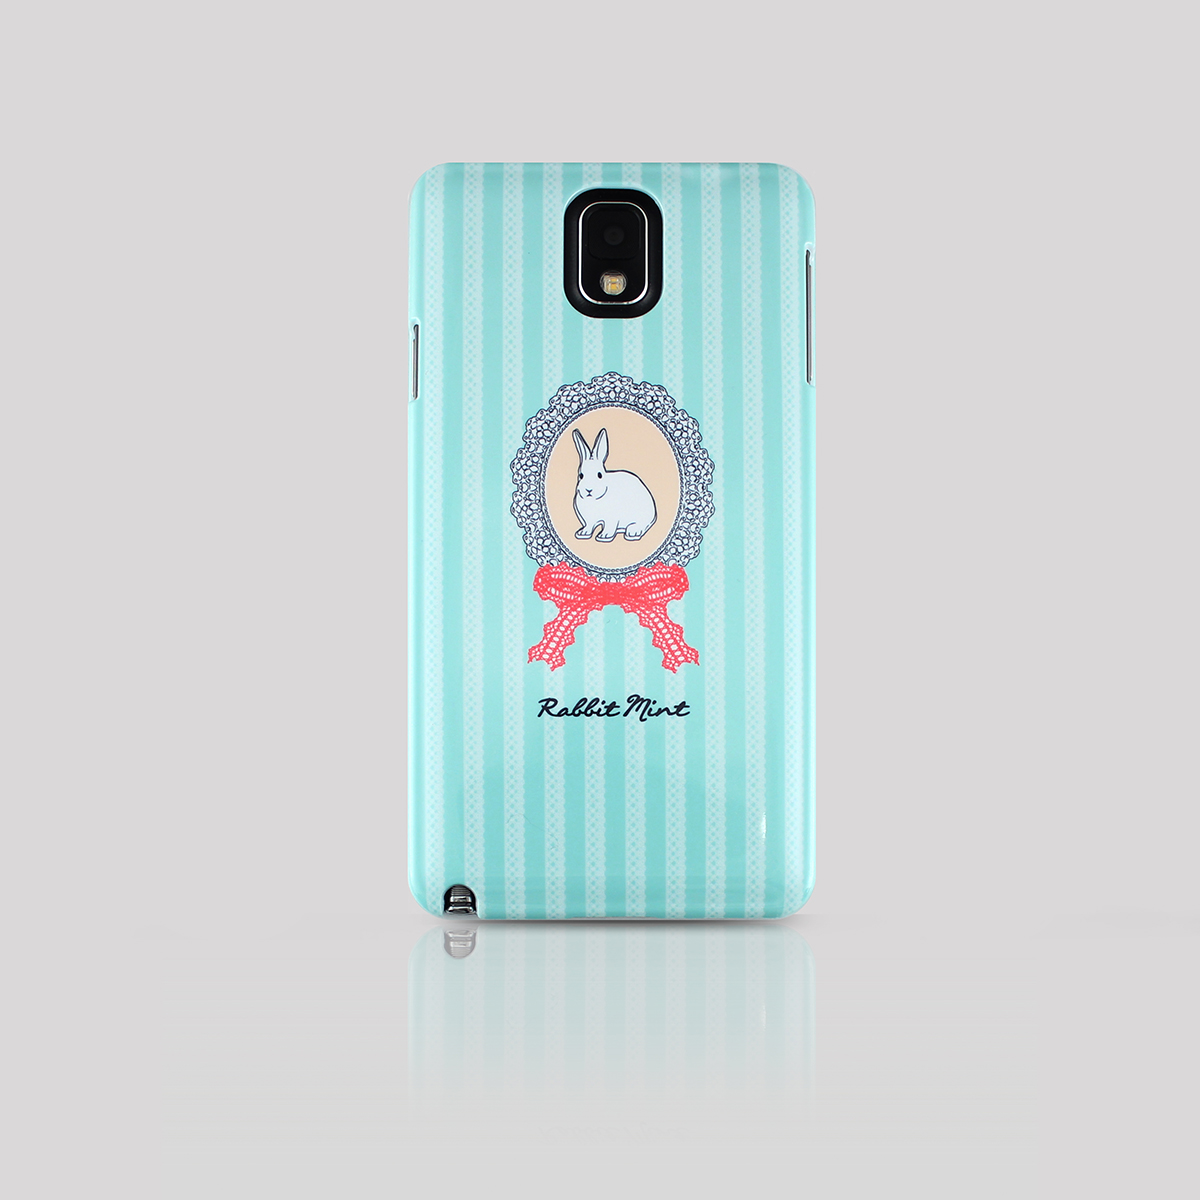 Samsung Galaxy Note 3 Case - Portrait Rabbit - Mint (p00047)